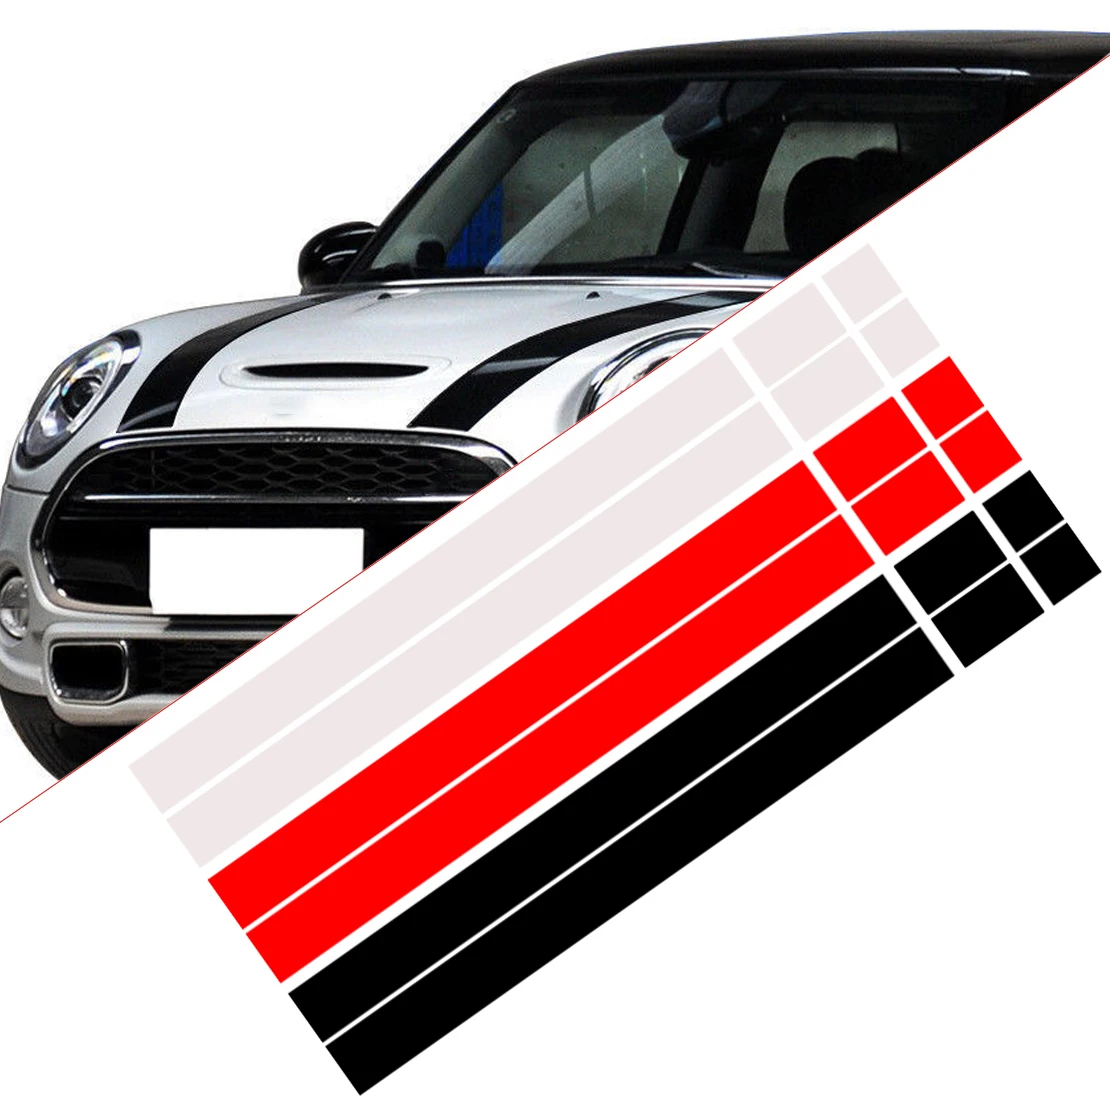 

beler 2Pcs Car Vinyl Bonnet Stripes Hood Sticker Cover Decal Fit for MINI Cooper R50 R53 R56 R55 dWm2754536 Black/White/Red